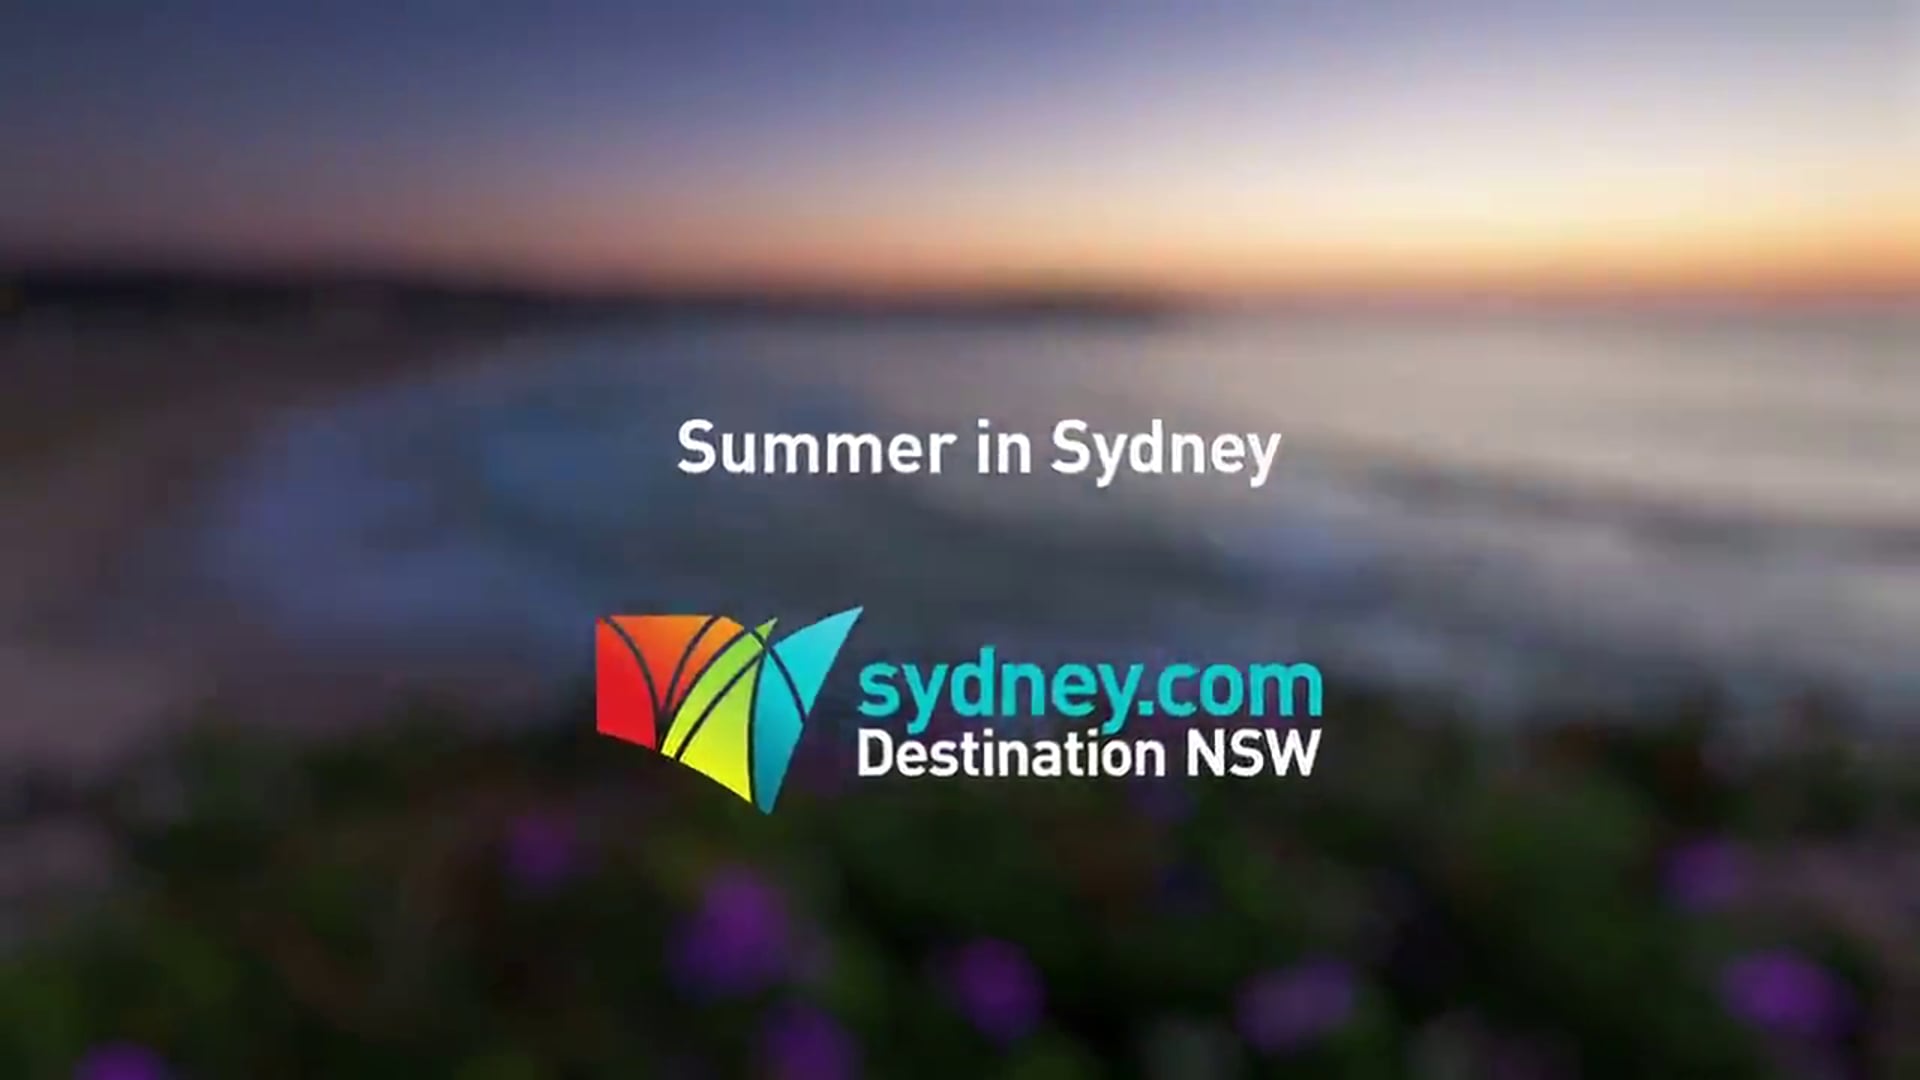 Summer in Sydney - Commercial